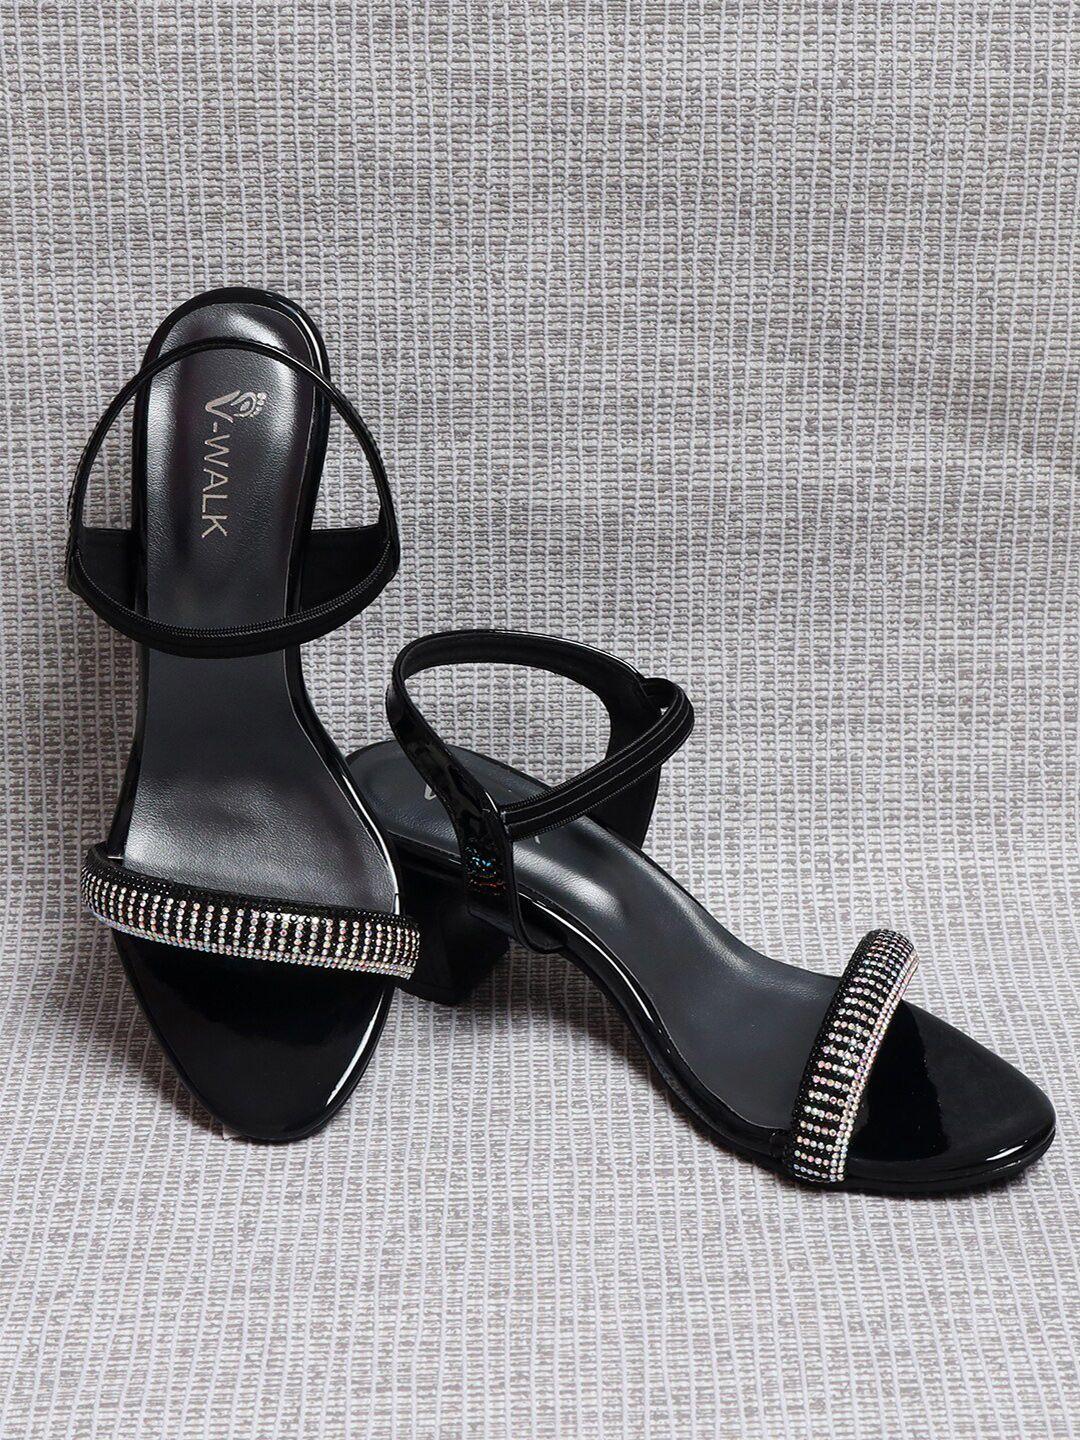 v-walk-embellished-party-open-toe-block-heels-with-backstrap